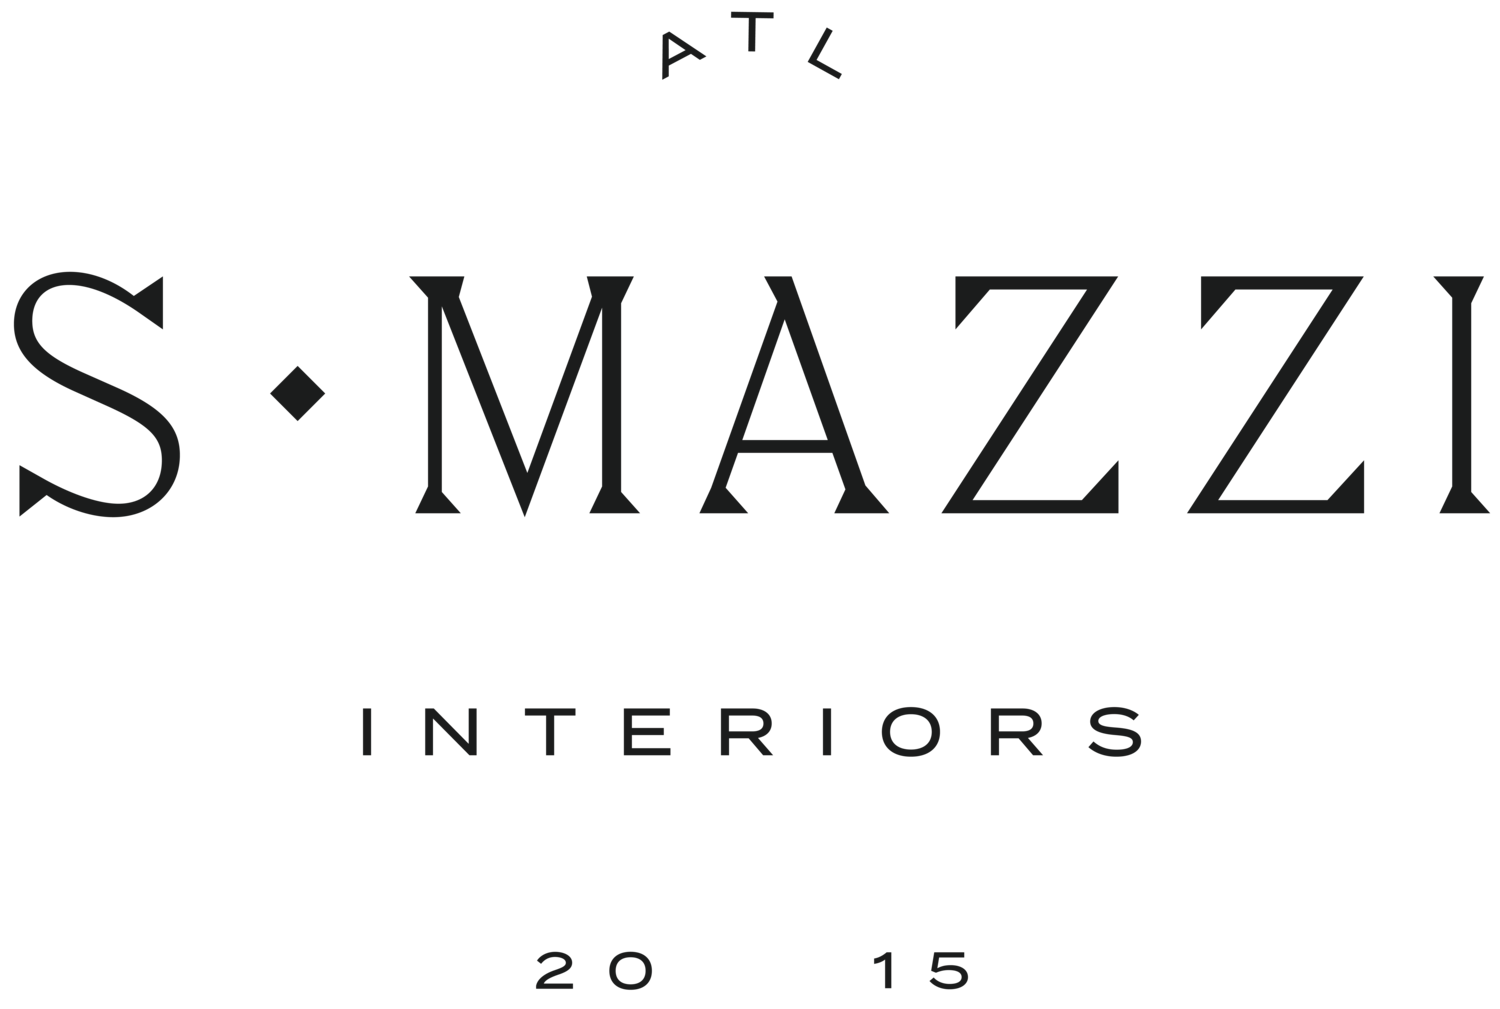 S. Mazzi Interiors